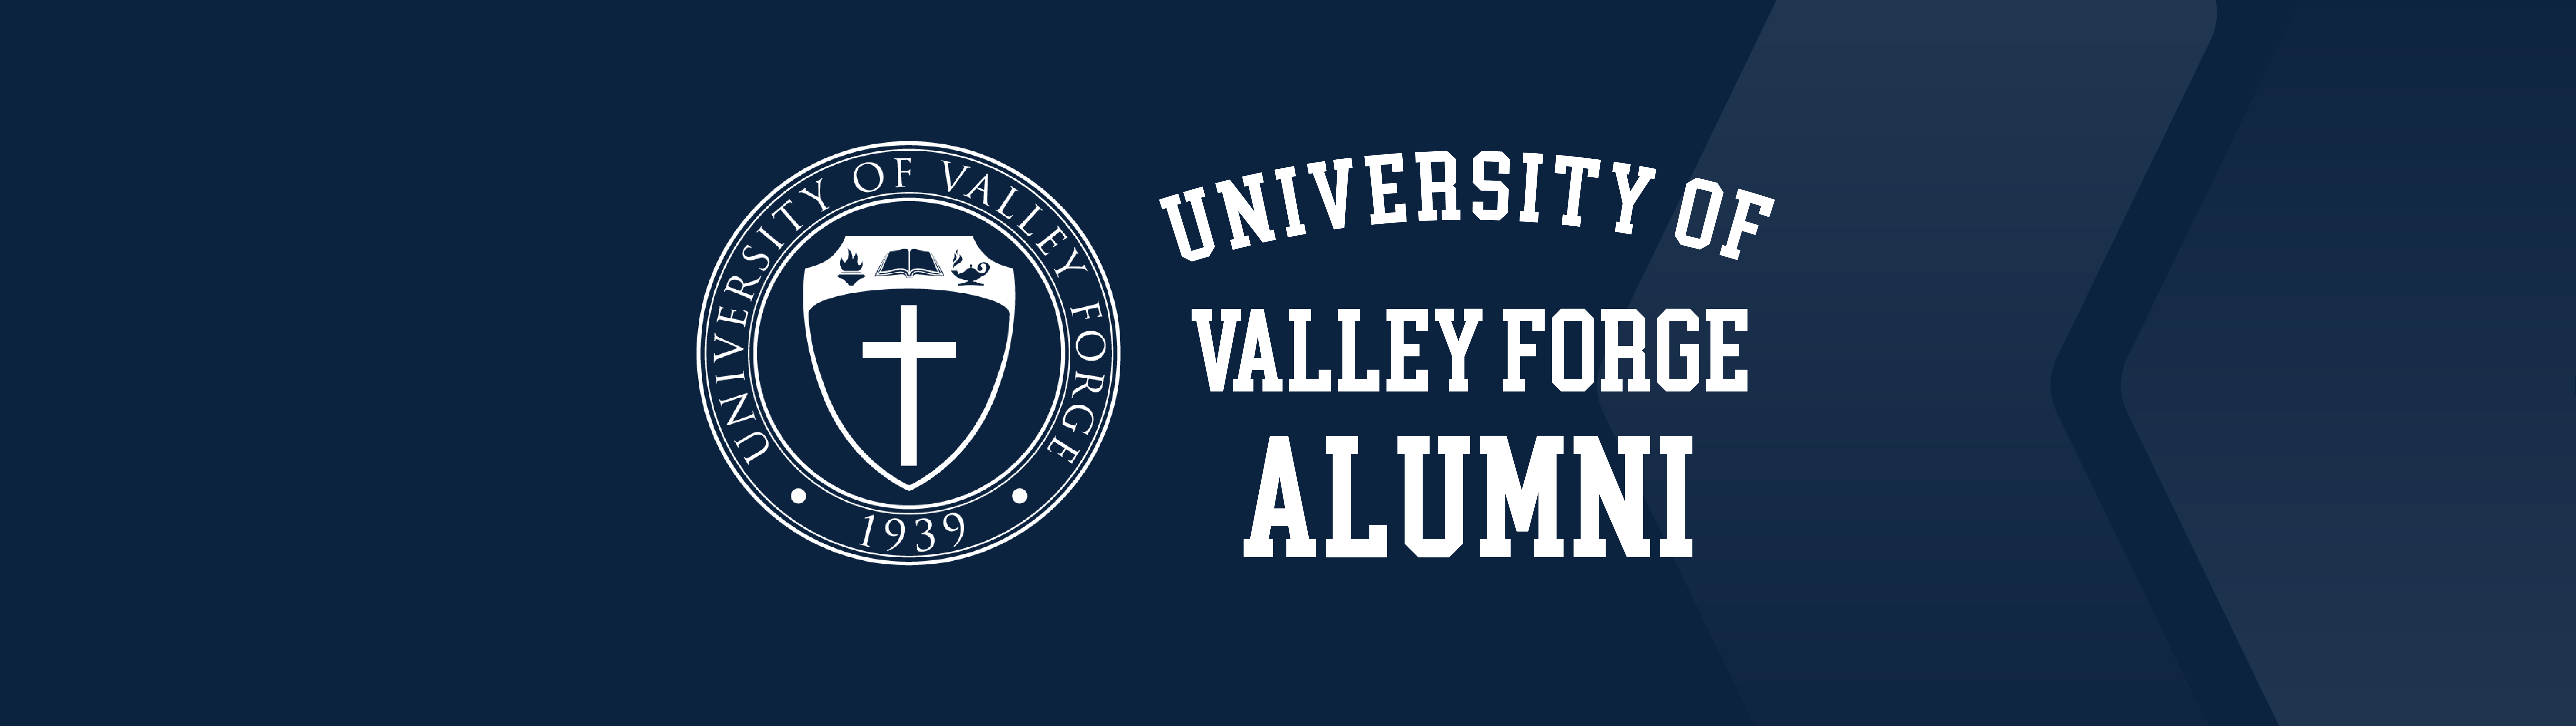 alumni-university-of-valley-forge